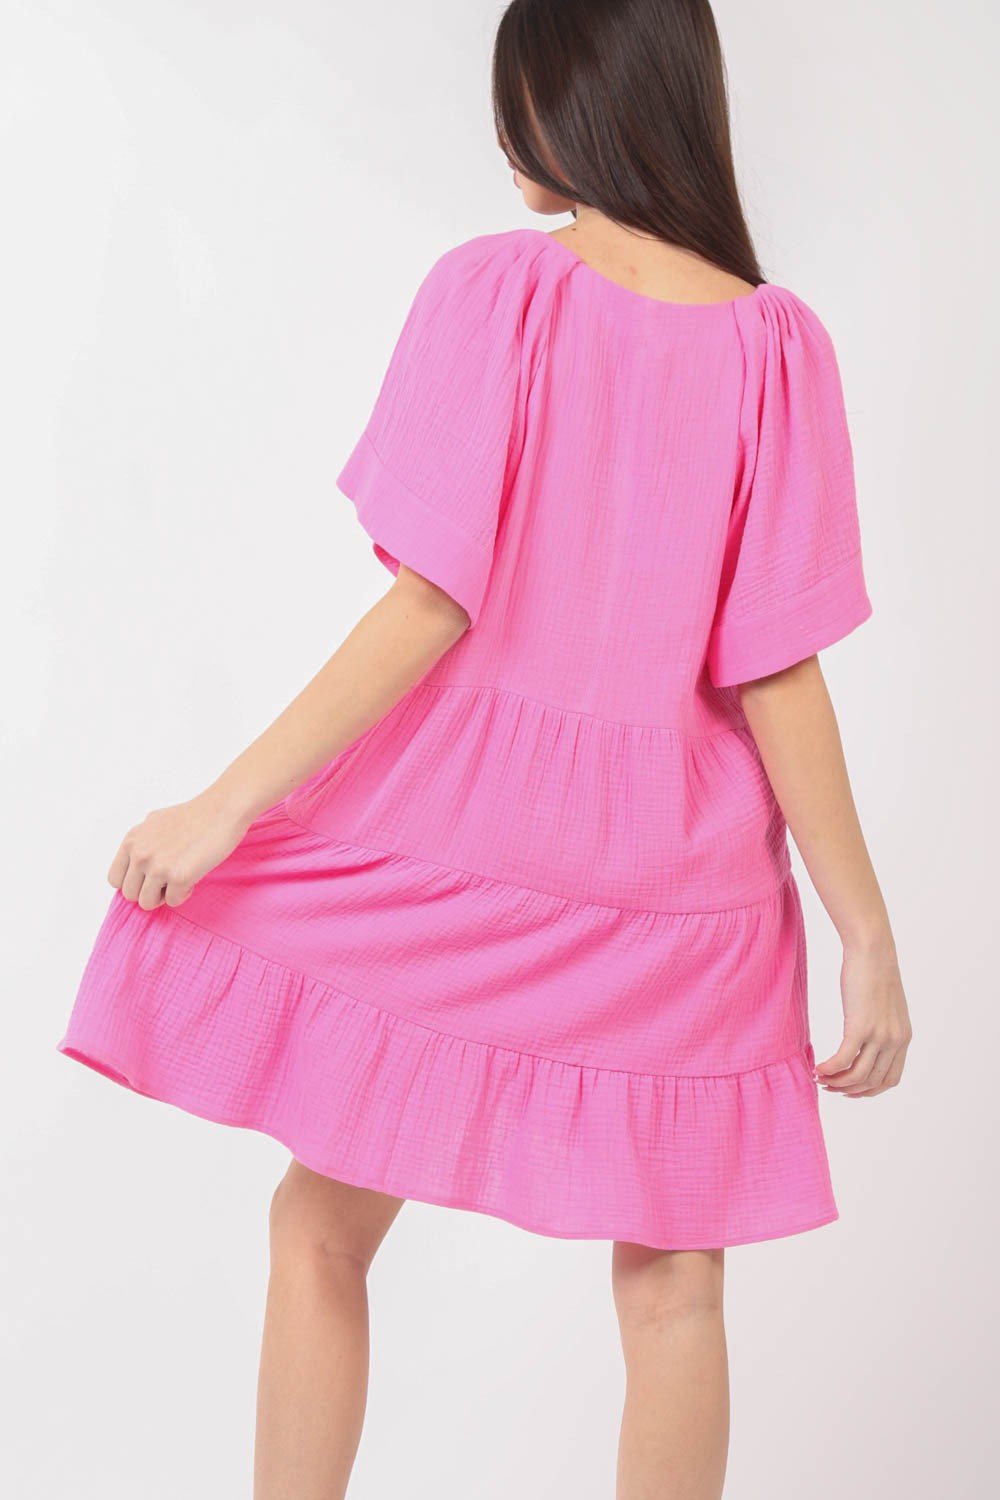 Textured Cotton V-Neck Ruffled Tiered Mini Dress in PinkMini DressVery J